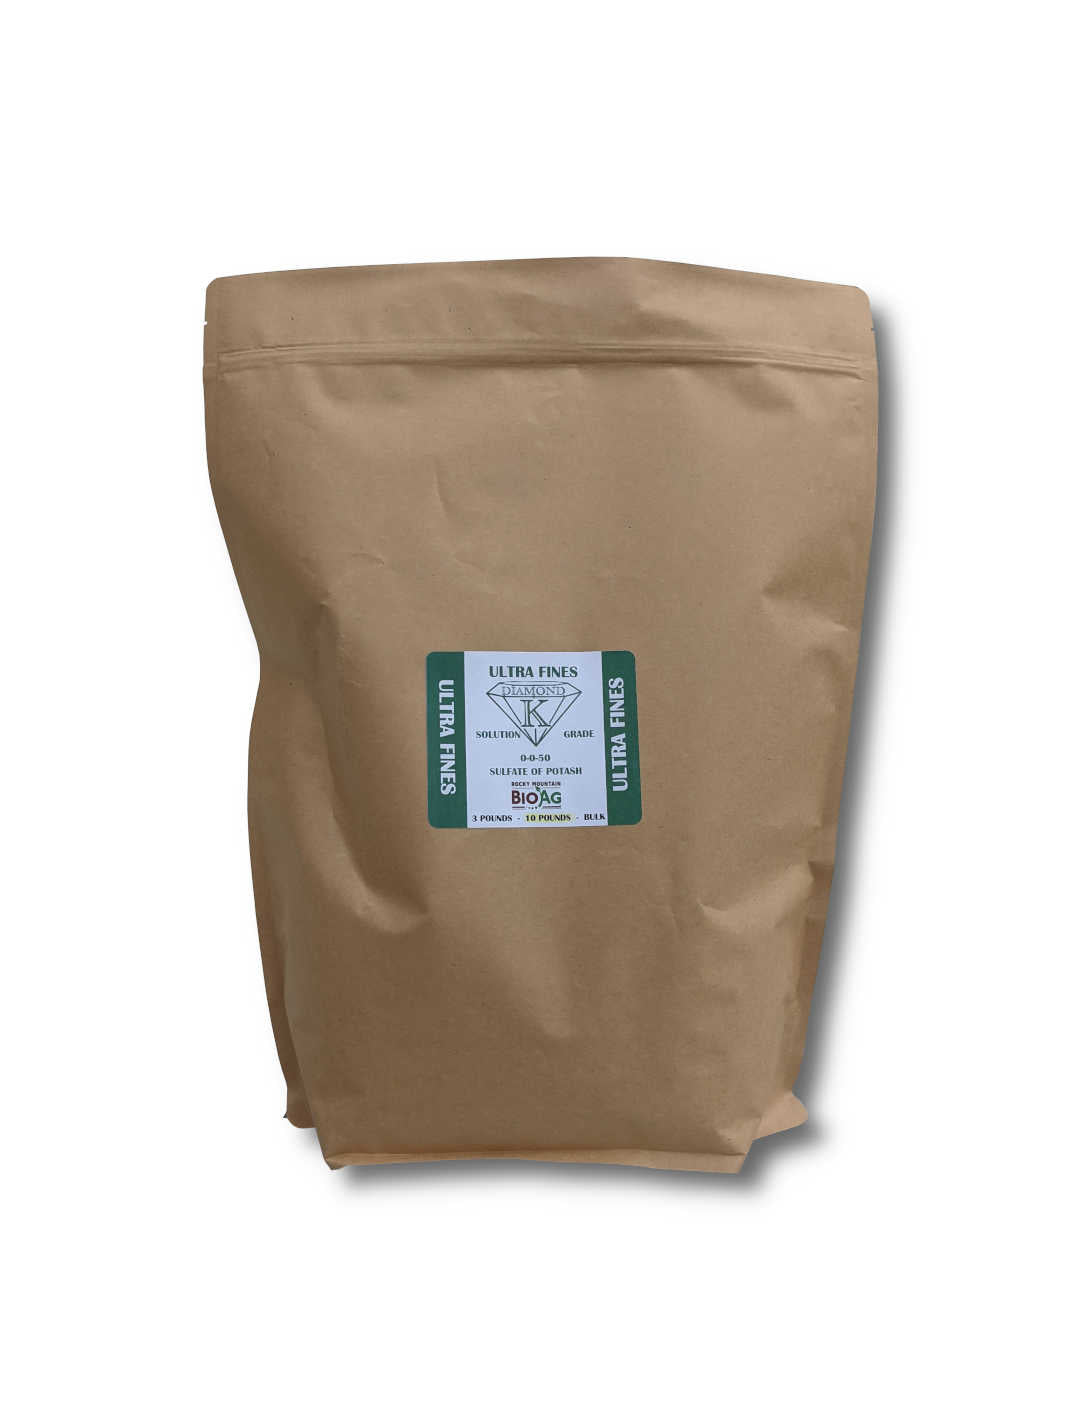 10 lb Bag of Sulfate of Potash Diamond K Ultra Fine Potassium Sulfate